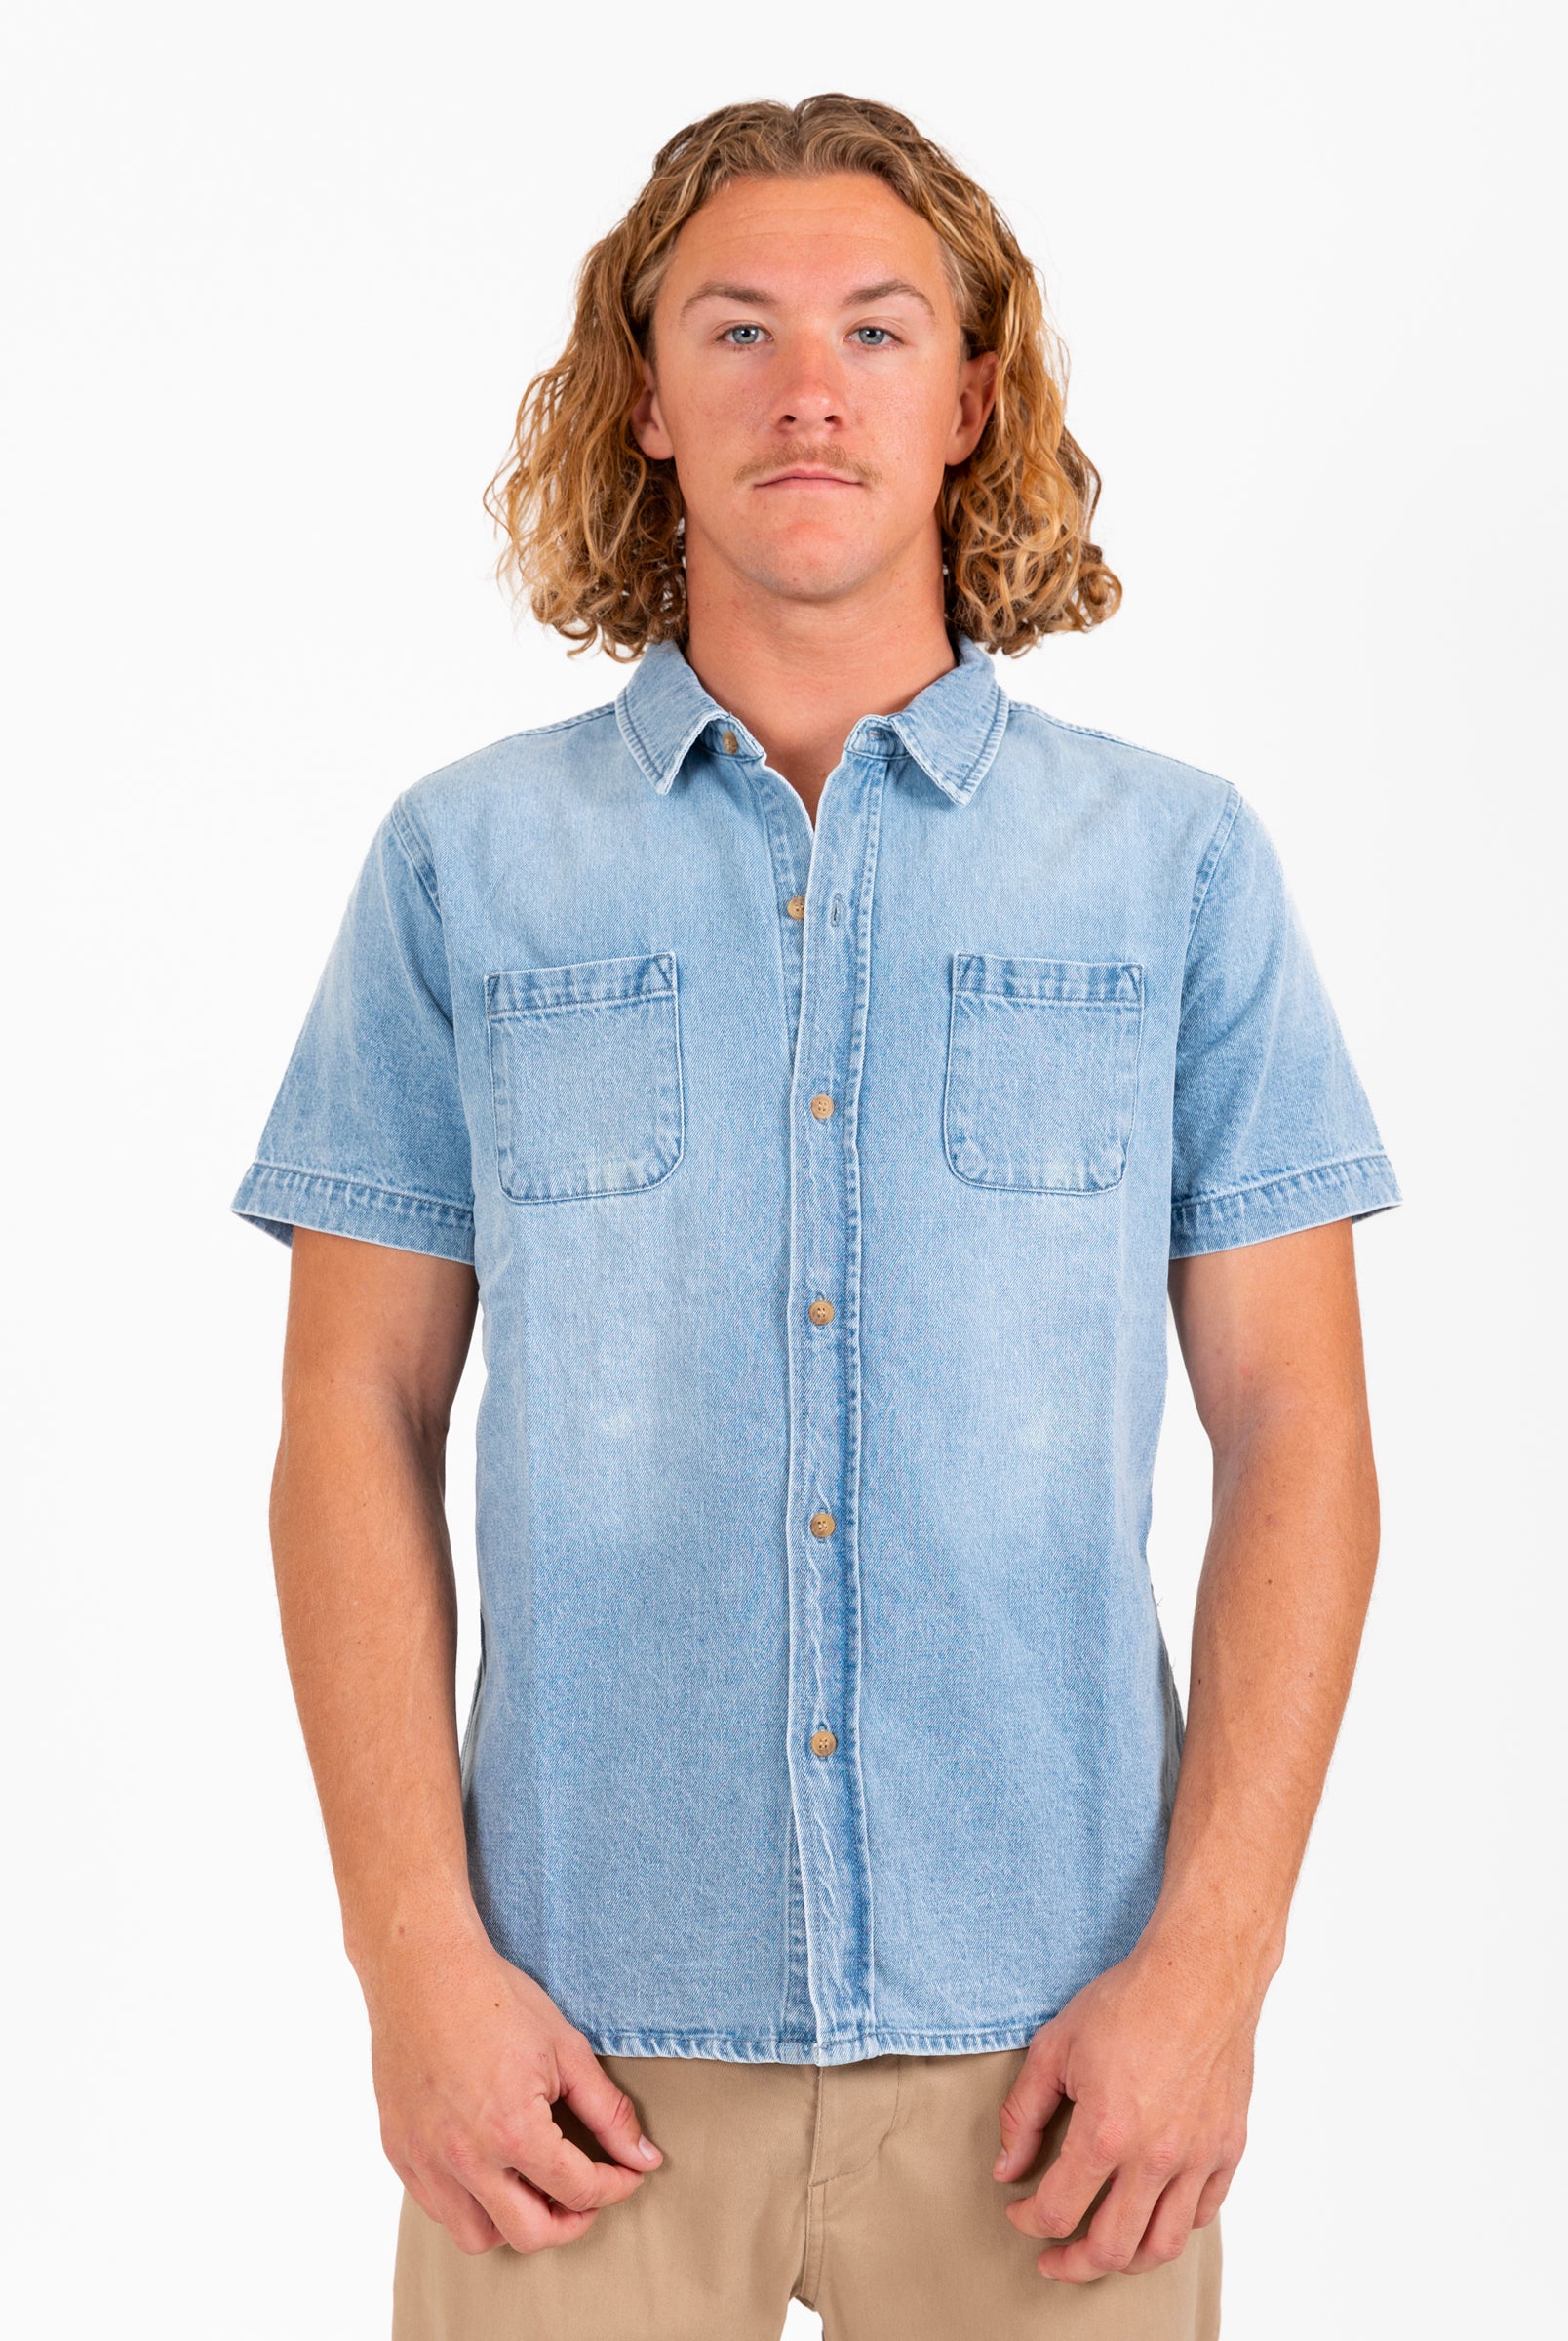 Duro Short Sleeve Denim Shirt Ash Blue | Rusty USA